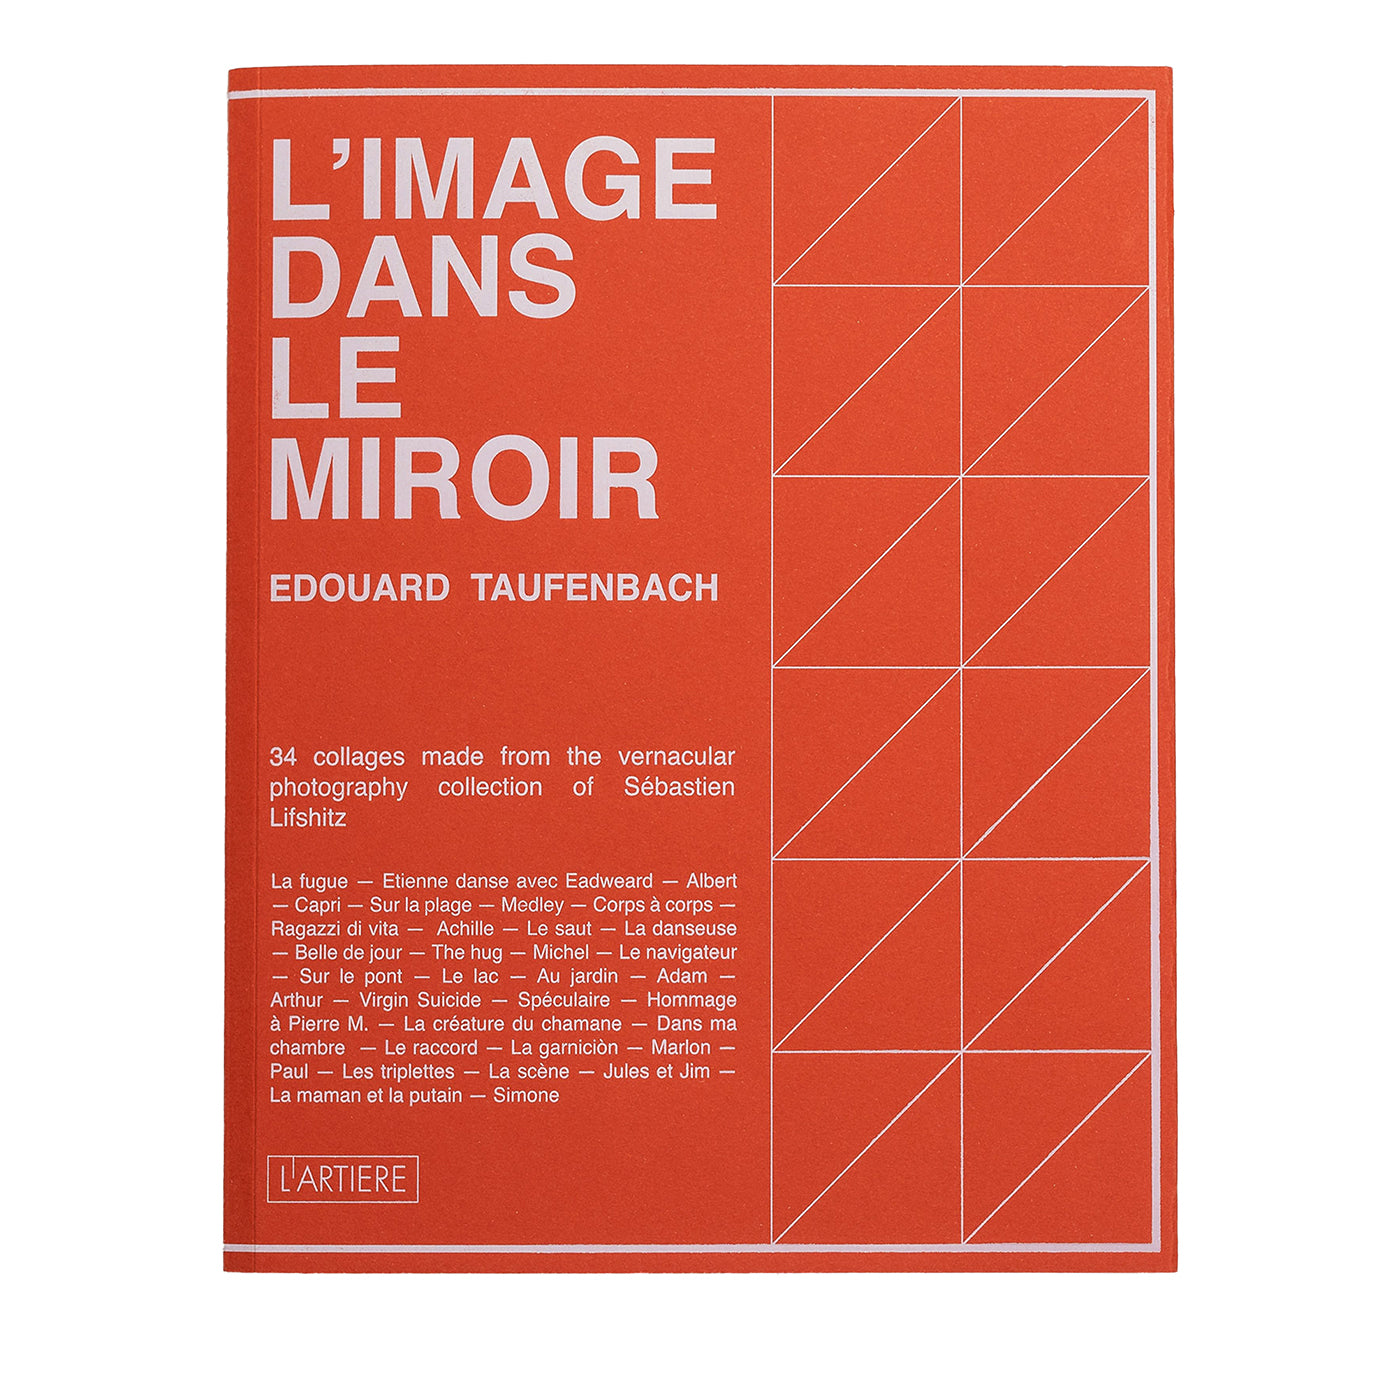 L'image dans le miroir - Edouard Taufenbach - Edición limitada de 25 ejemplares - Vista principal